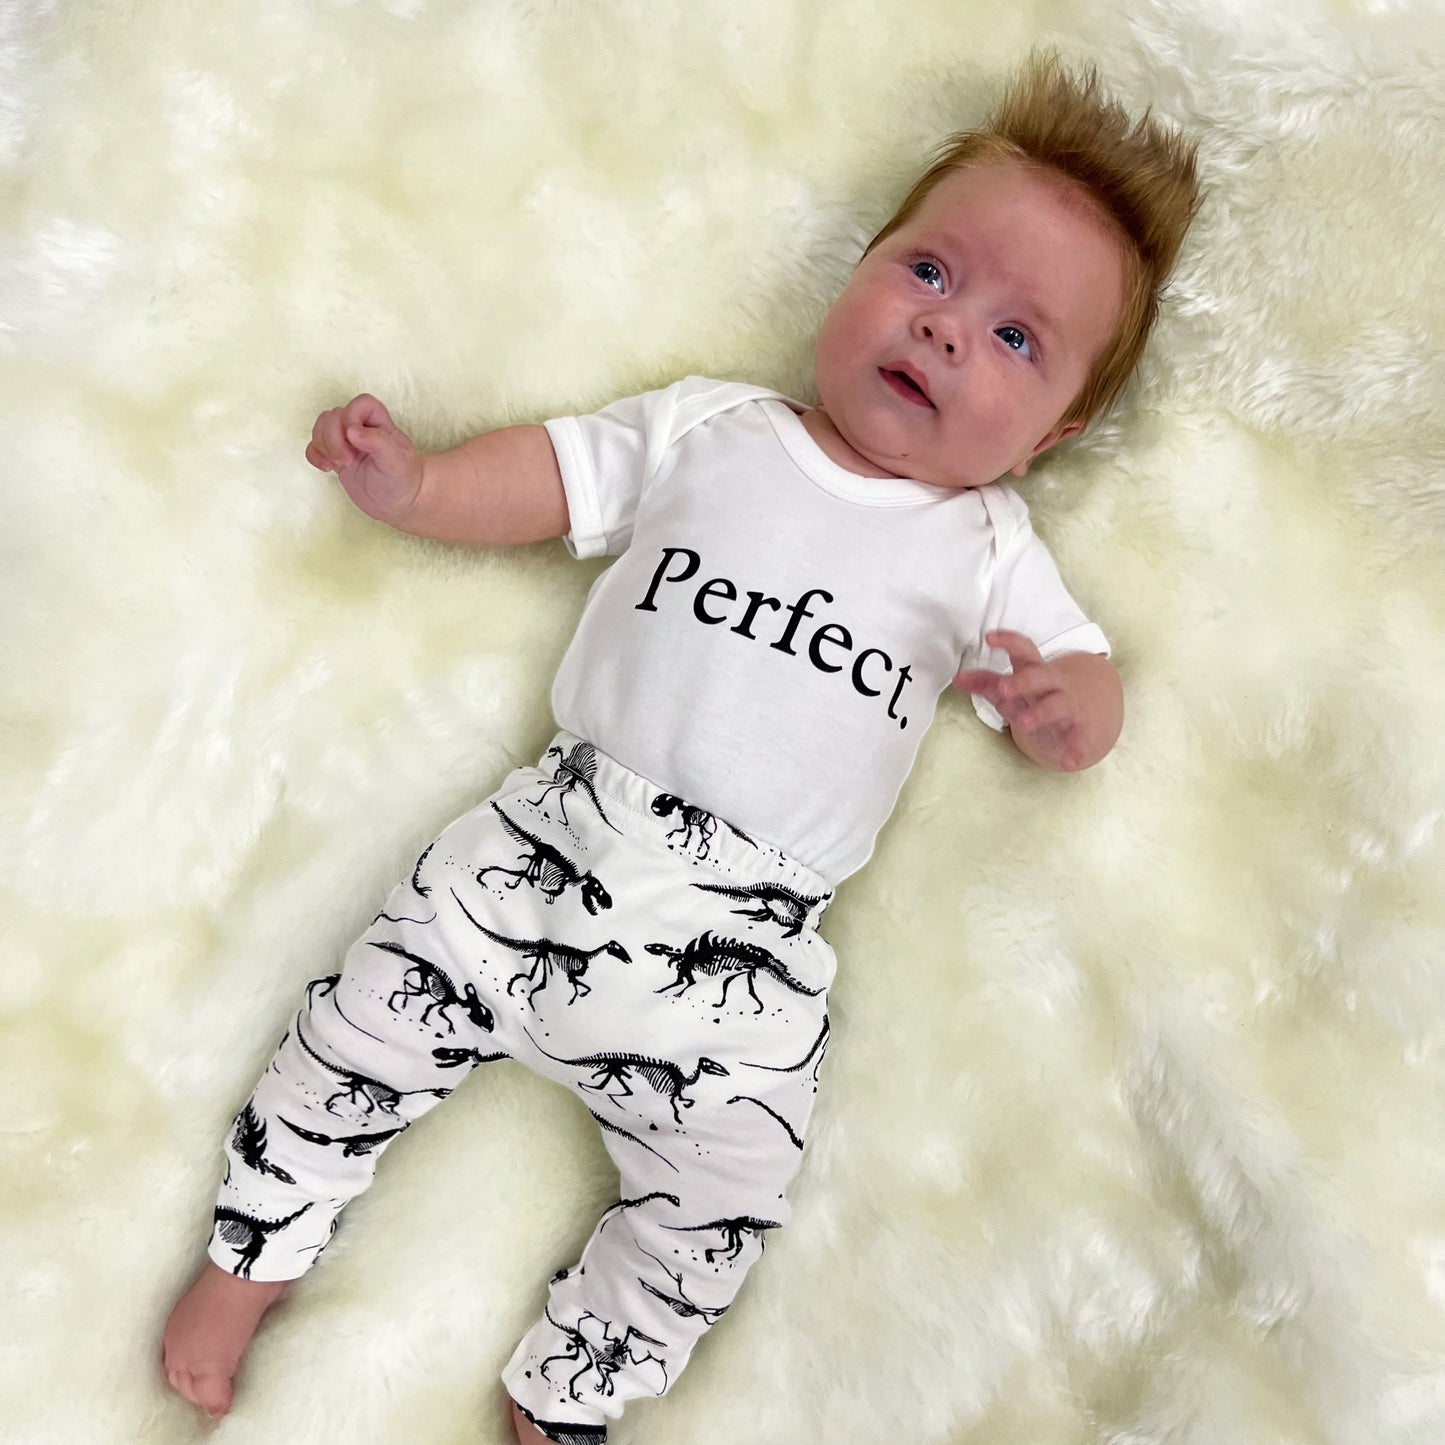 Perfect Cotton Baby Vest